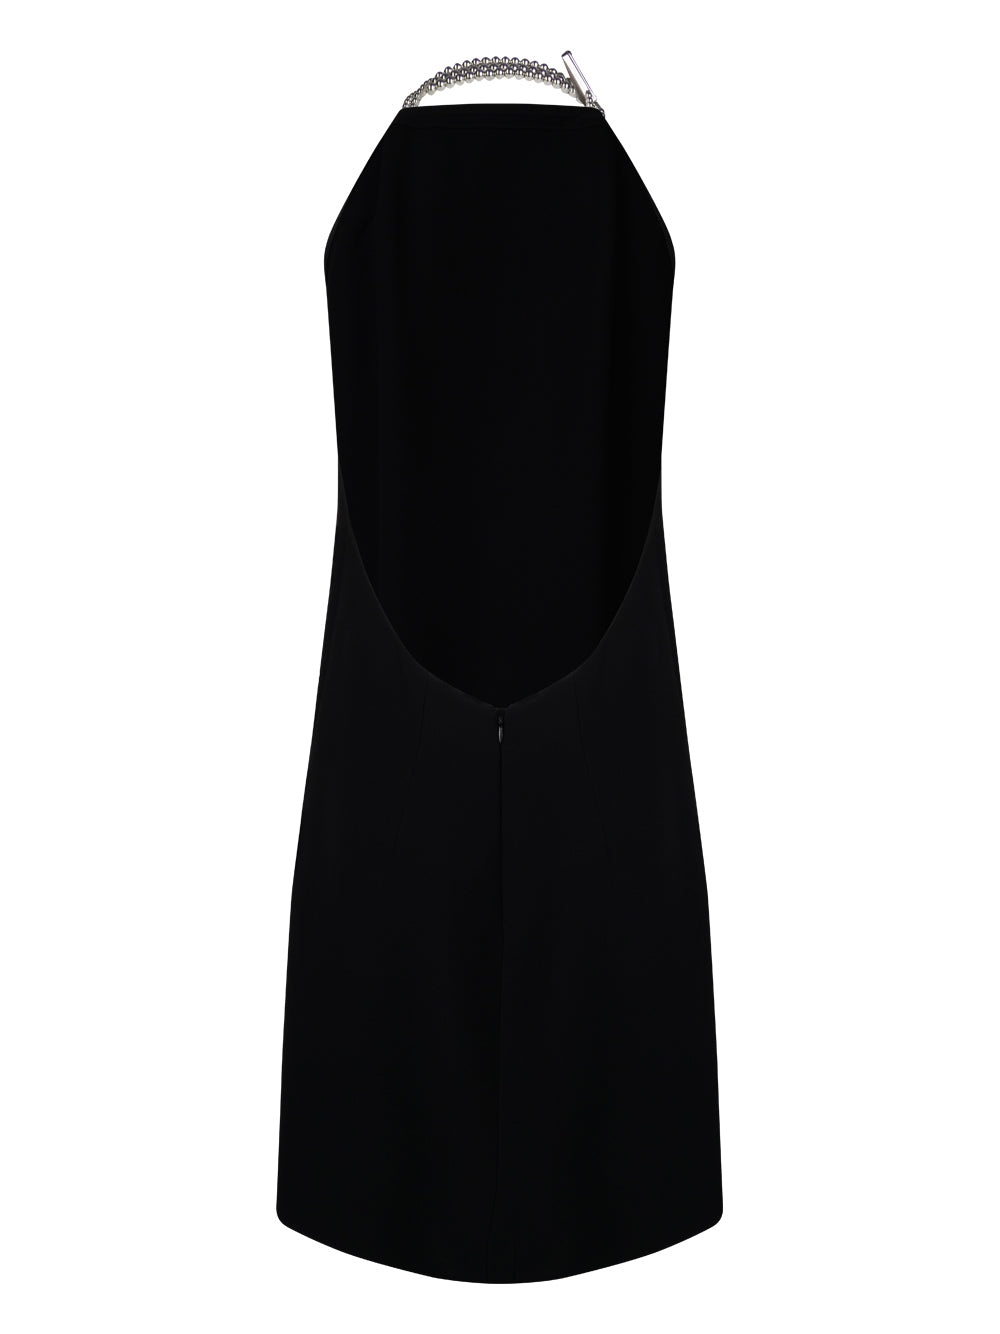 PRADA BLACK SUIT DRESS - 2